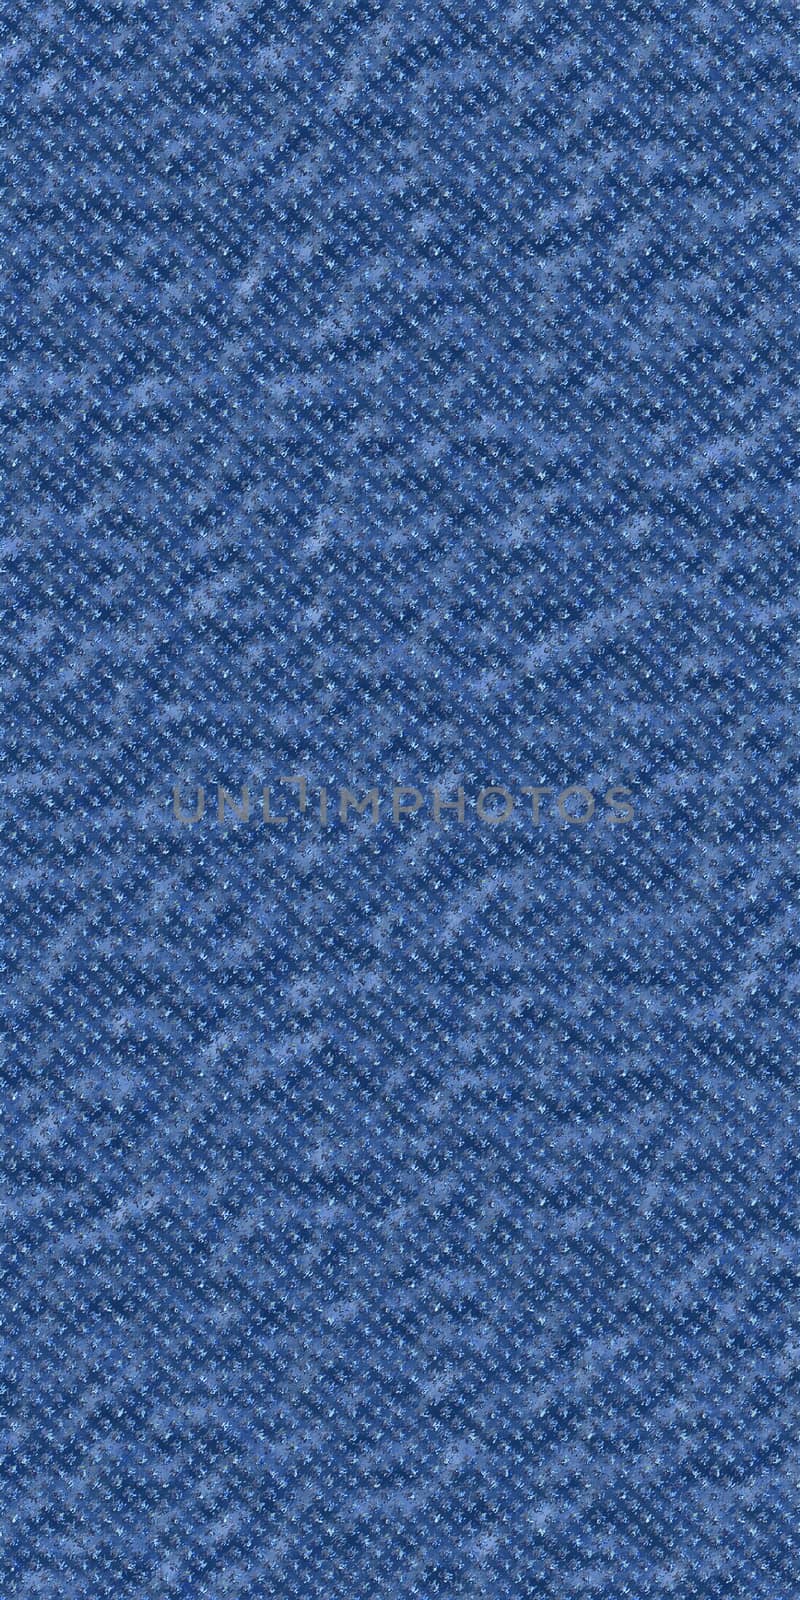 Liquid metal blot on blue background by sfinks